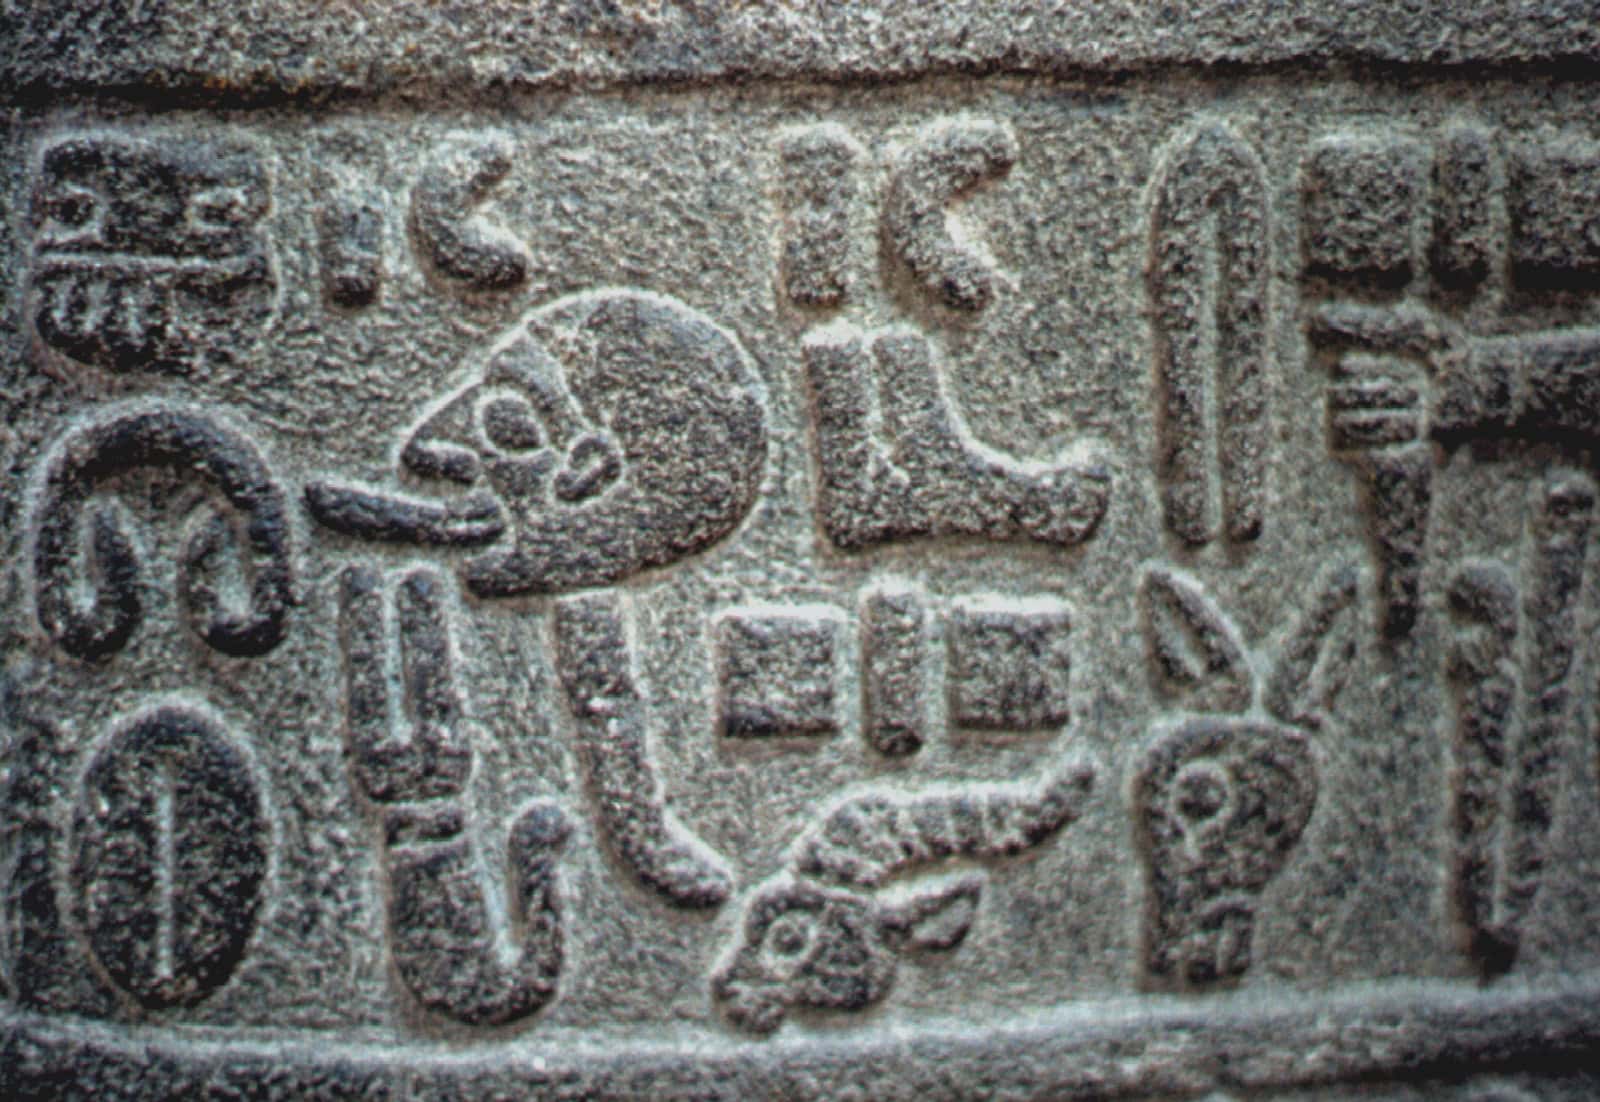 Hittite writing